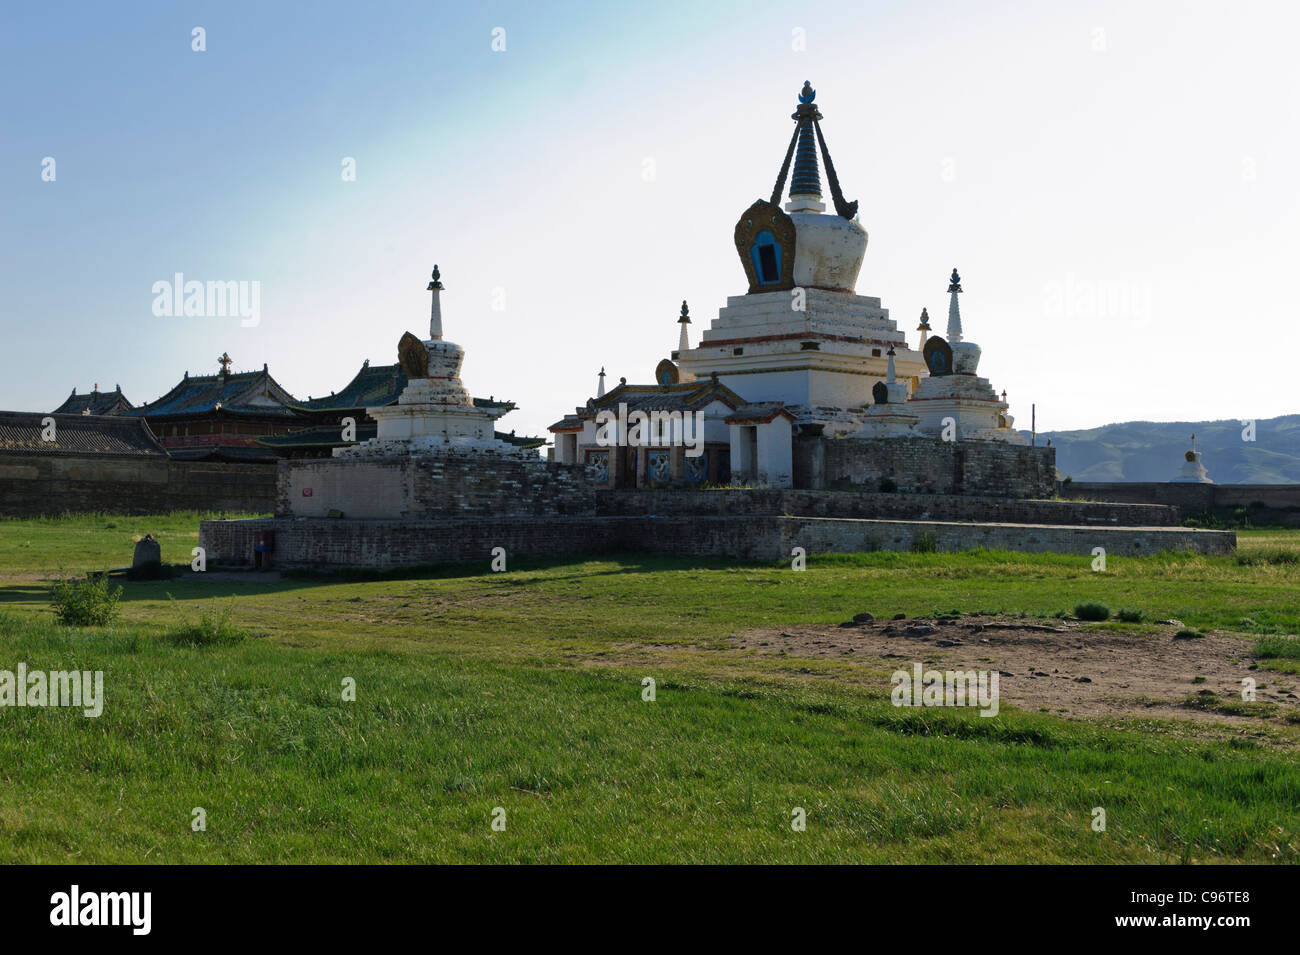 La stupa dorato di Erdene Zuu monastero (khiid) Karakorum, Mongolia. Unesco - Sito Patrimonio dell'umanità. Foto Stock